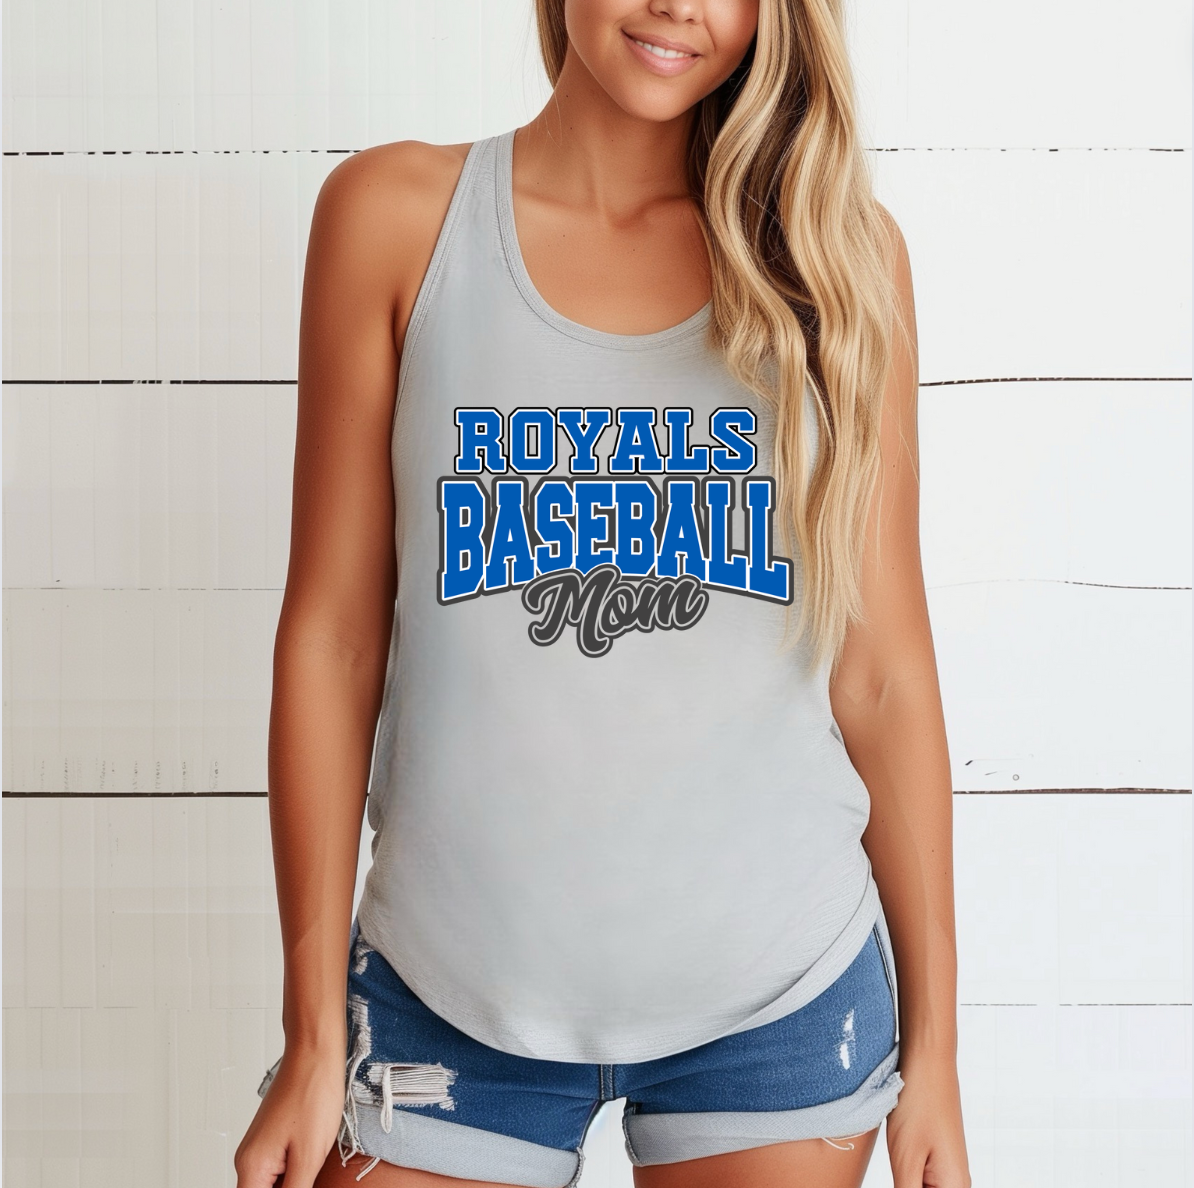 Royals Baseball Family - ALL available